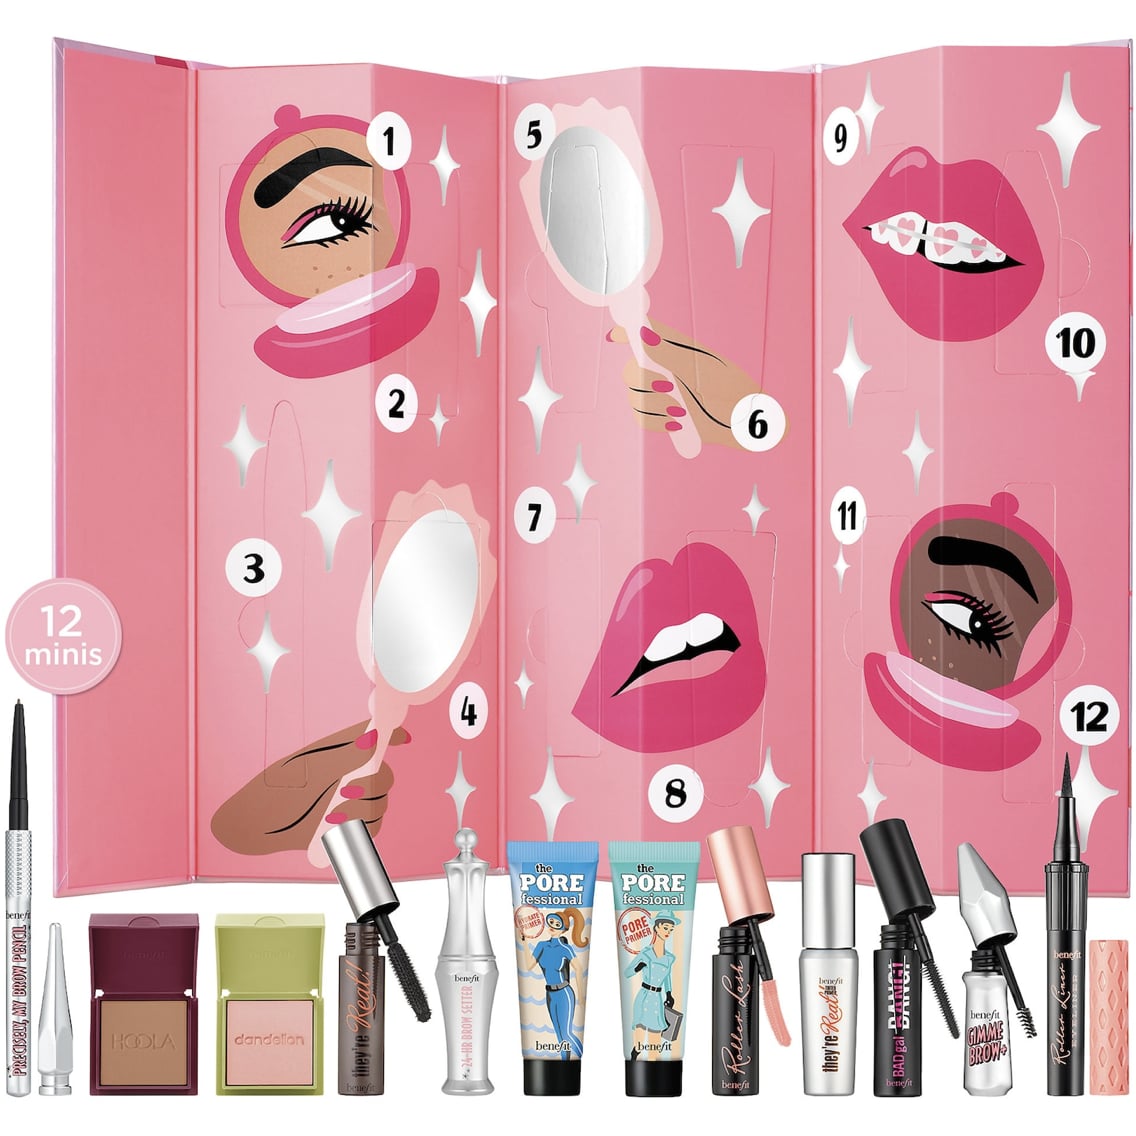 Benefit Cosmetics Shake Your Beauty Advent Calendar 2020 Popsugar Beauty